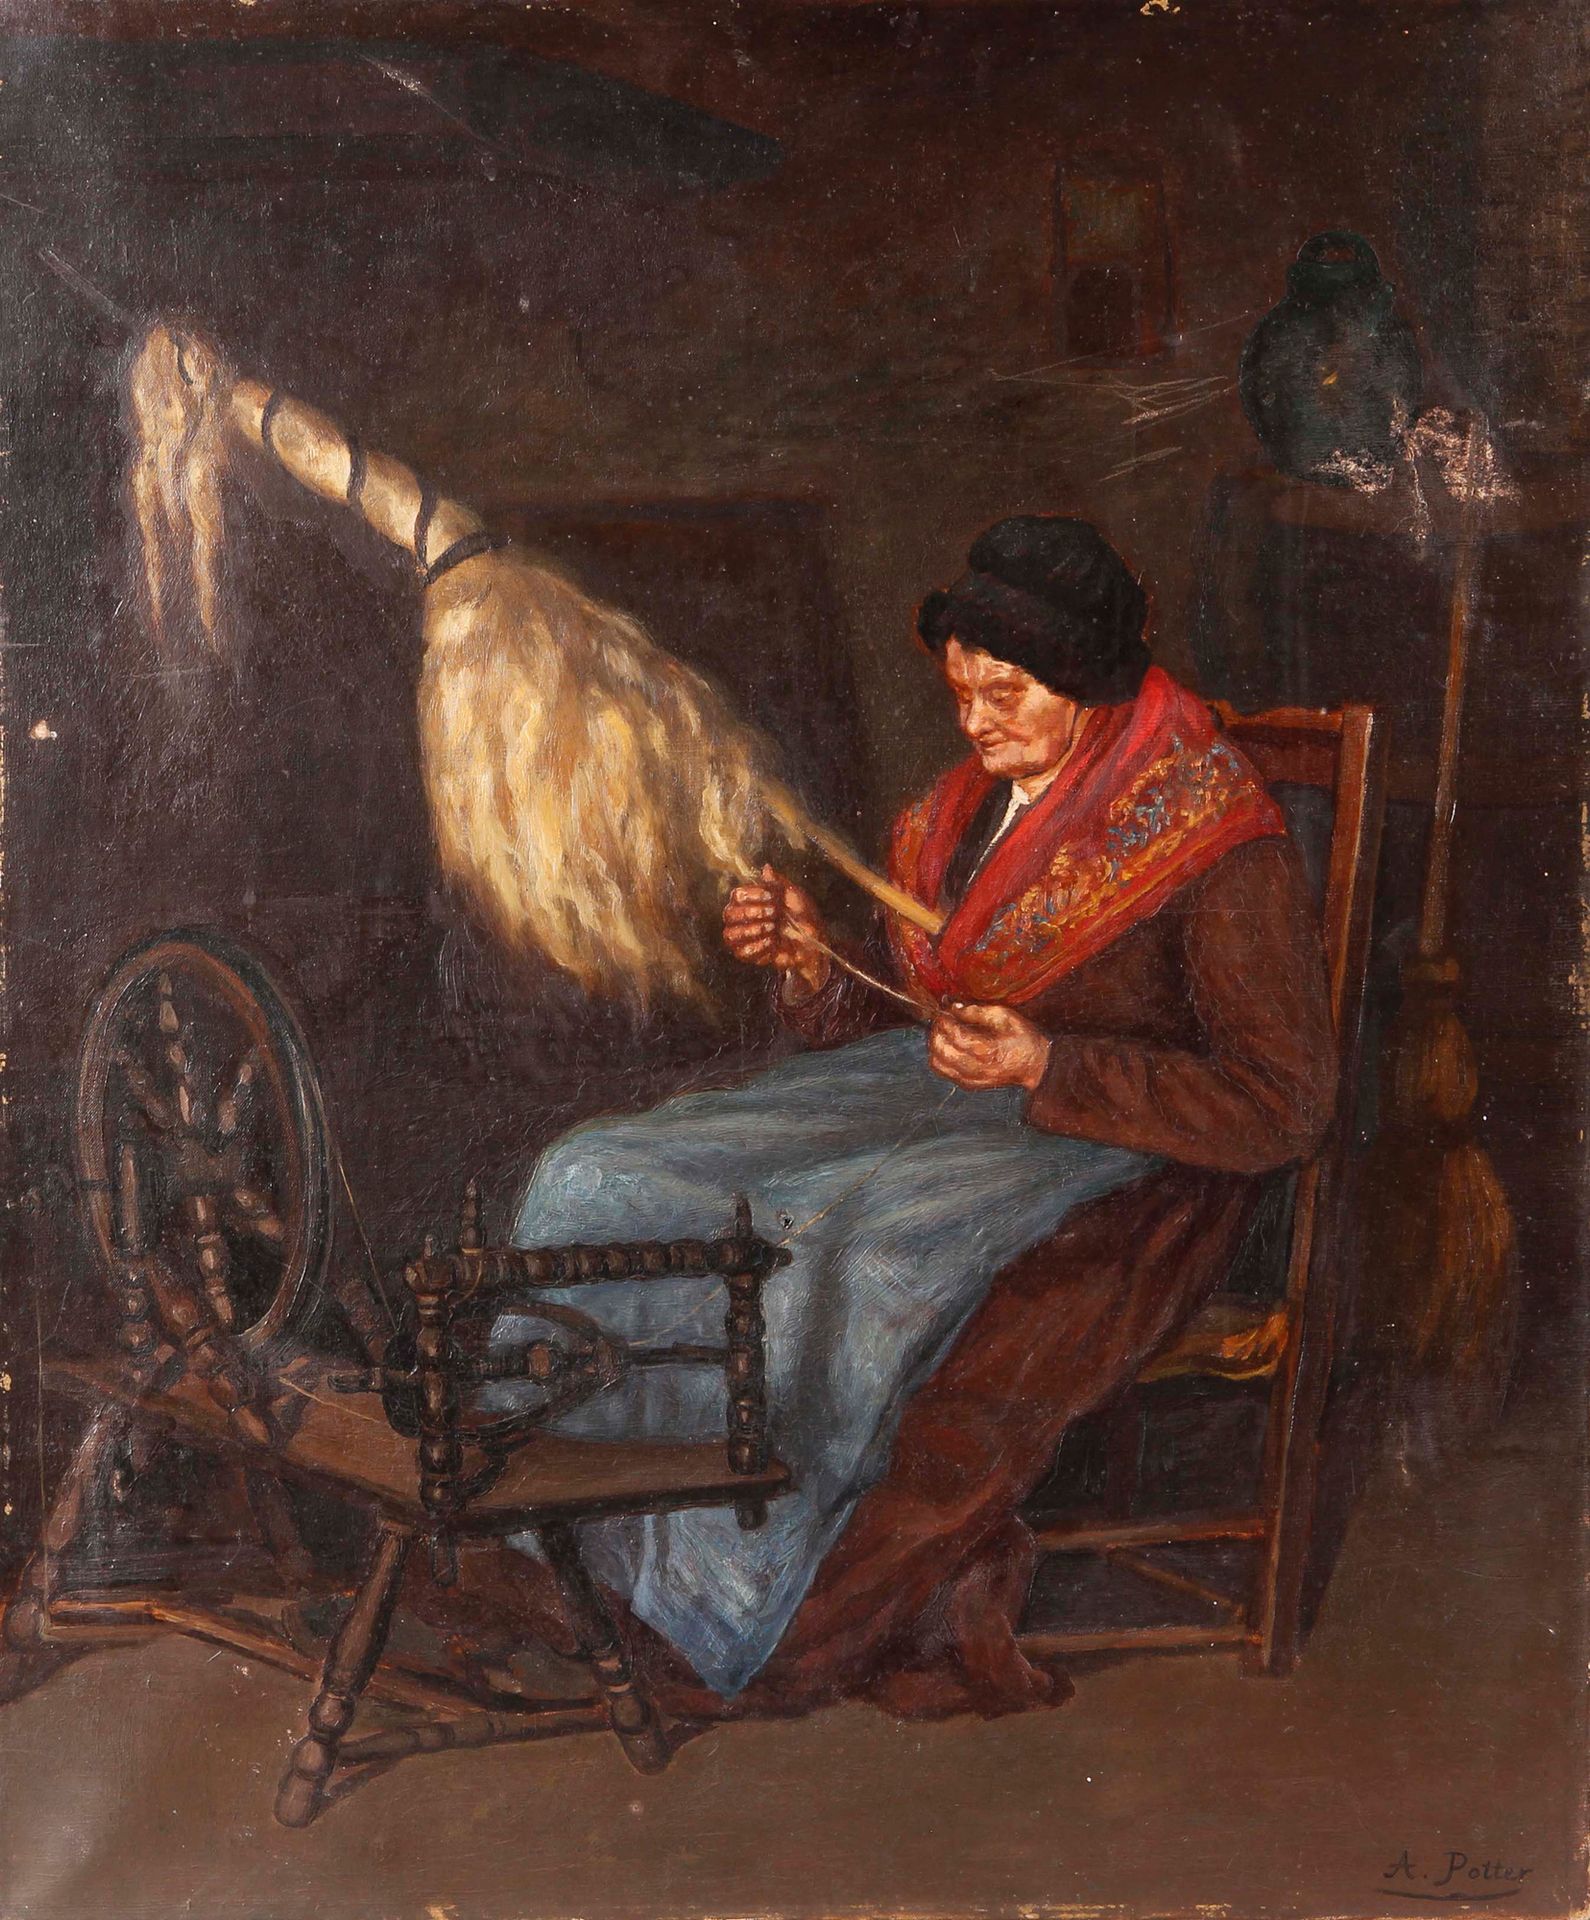 Null 波特-阿道夫(1835-1911)

带旋转轮的旋转器

布面油画（意外，无框）。

65 x 54 cm